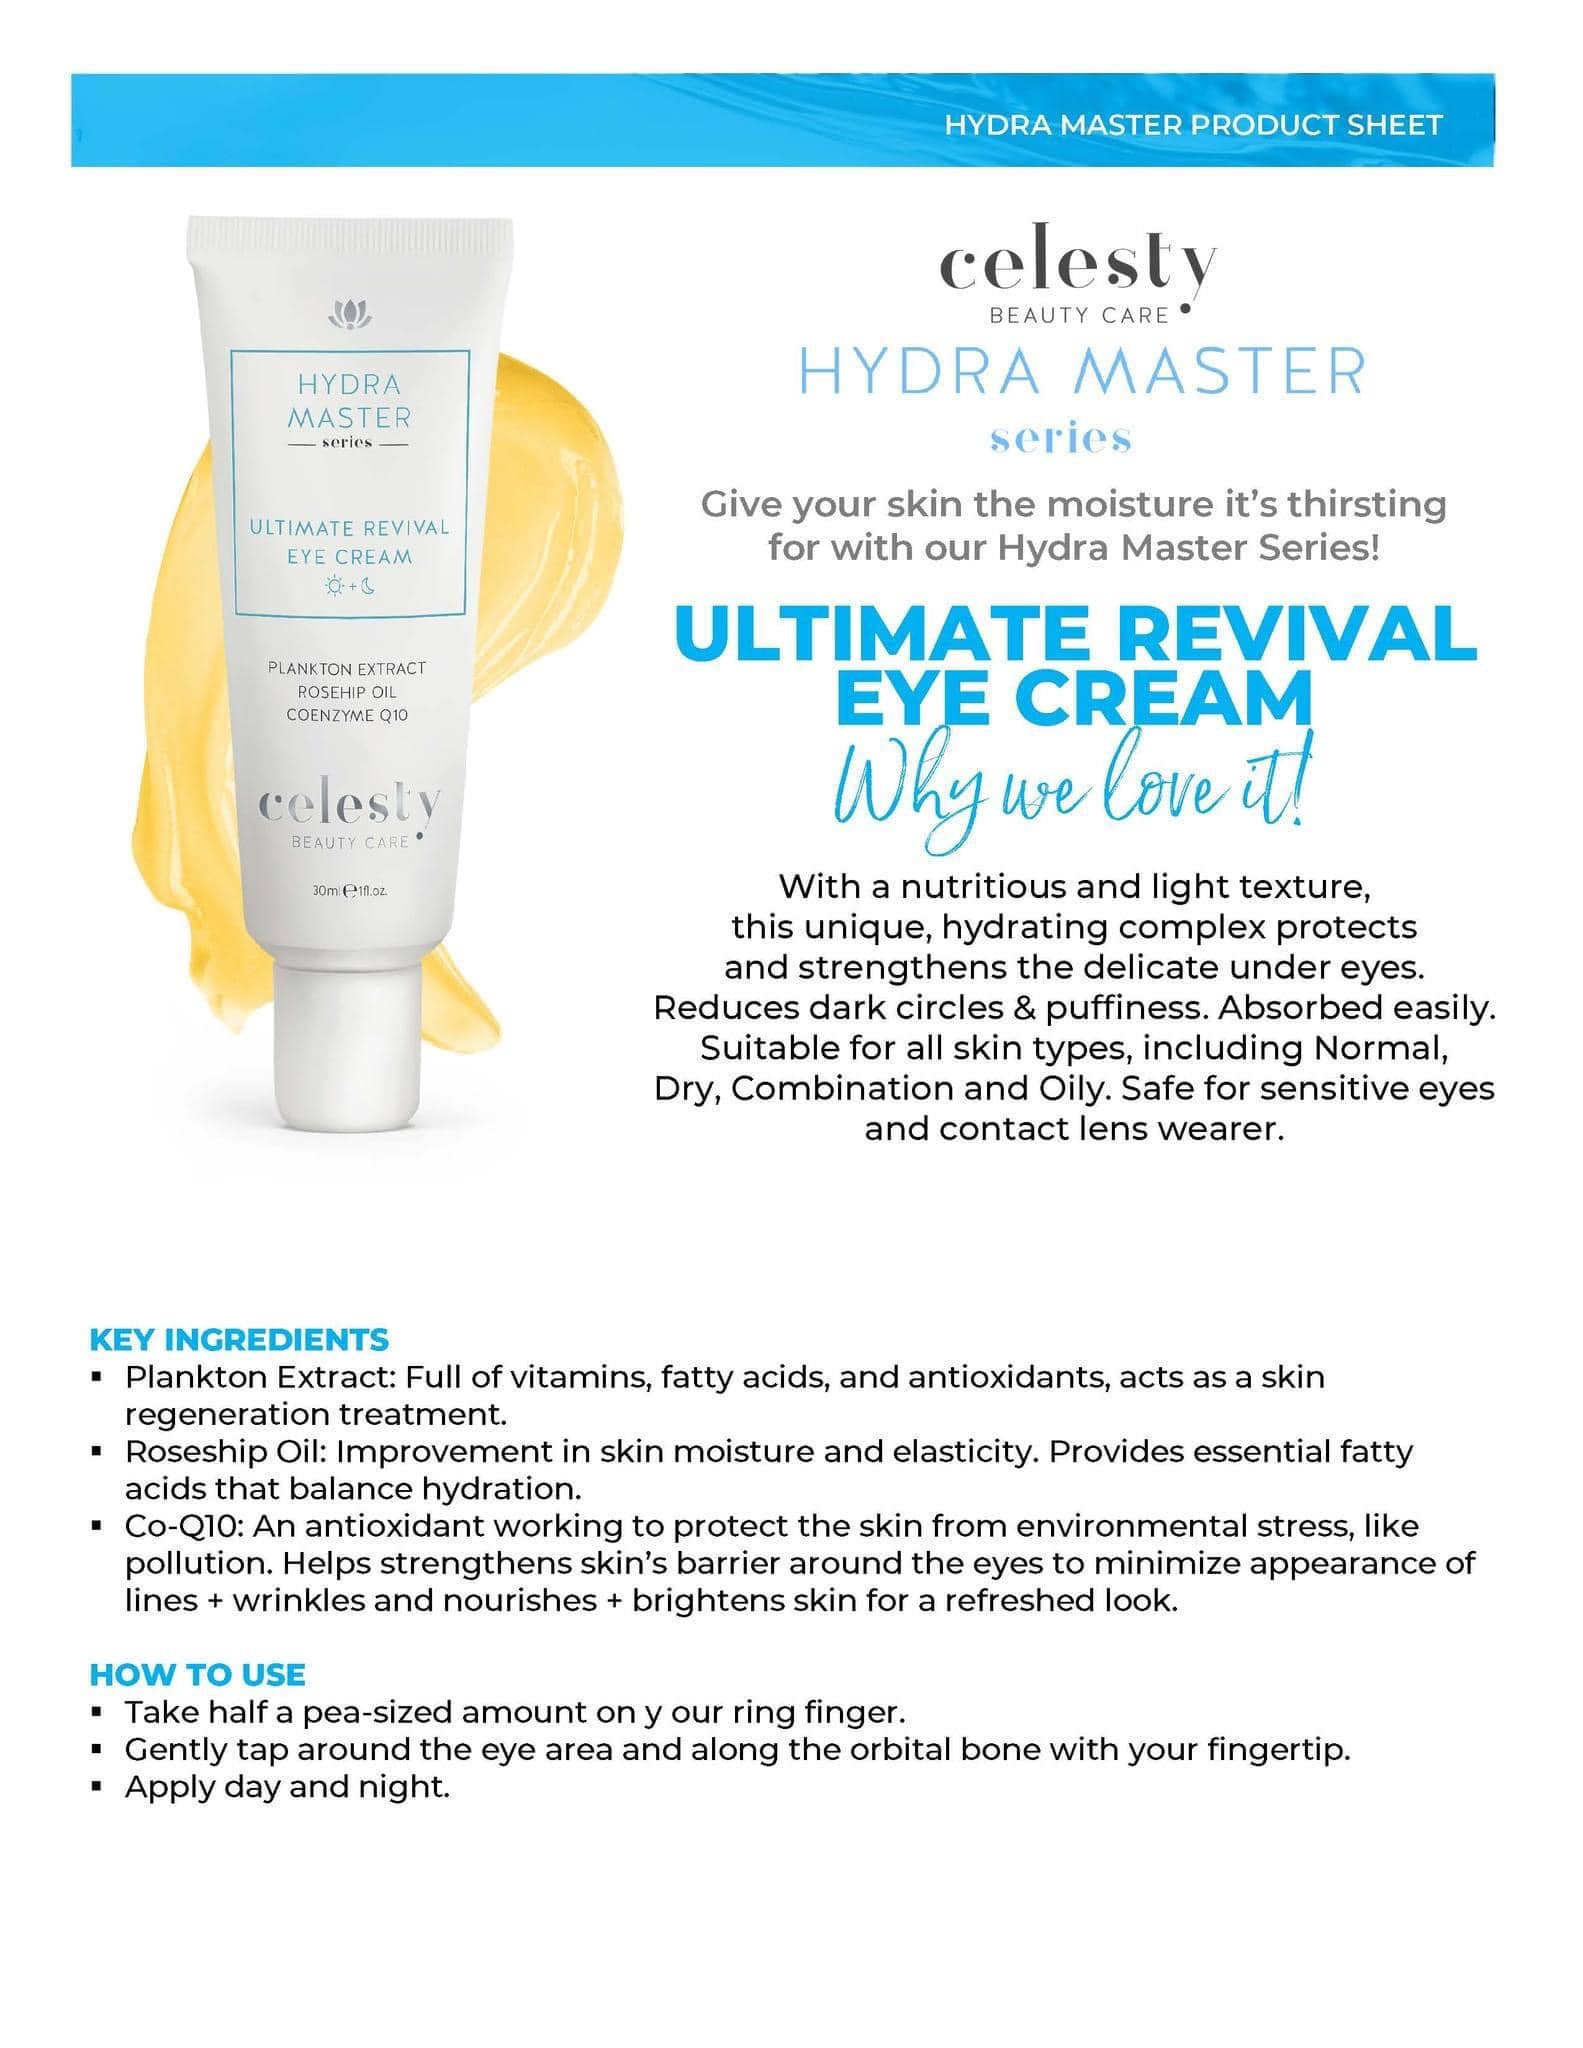 Ultimate Revival Eye Cream